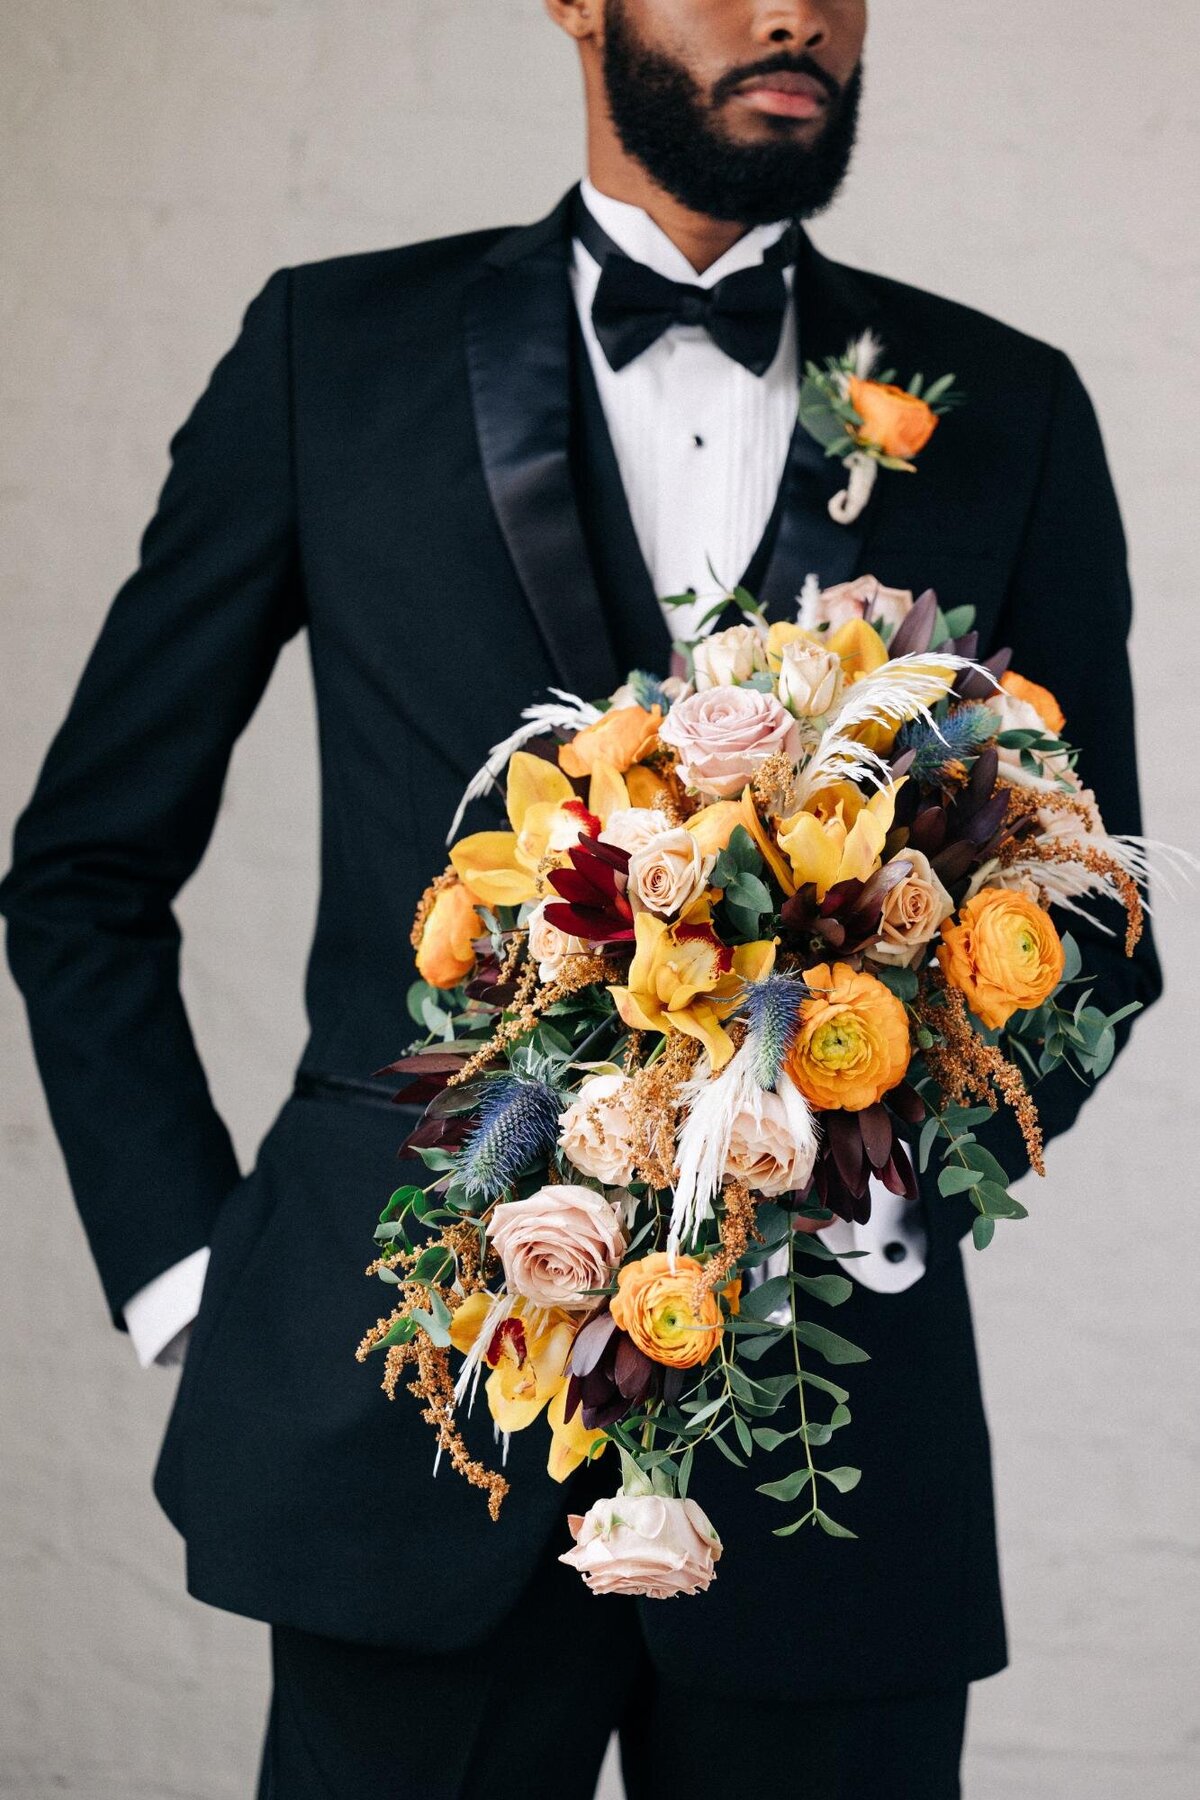 Man in a black suit holding a large floral bouquet.